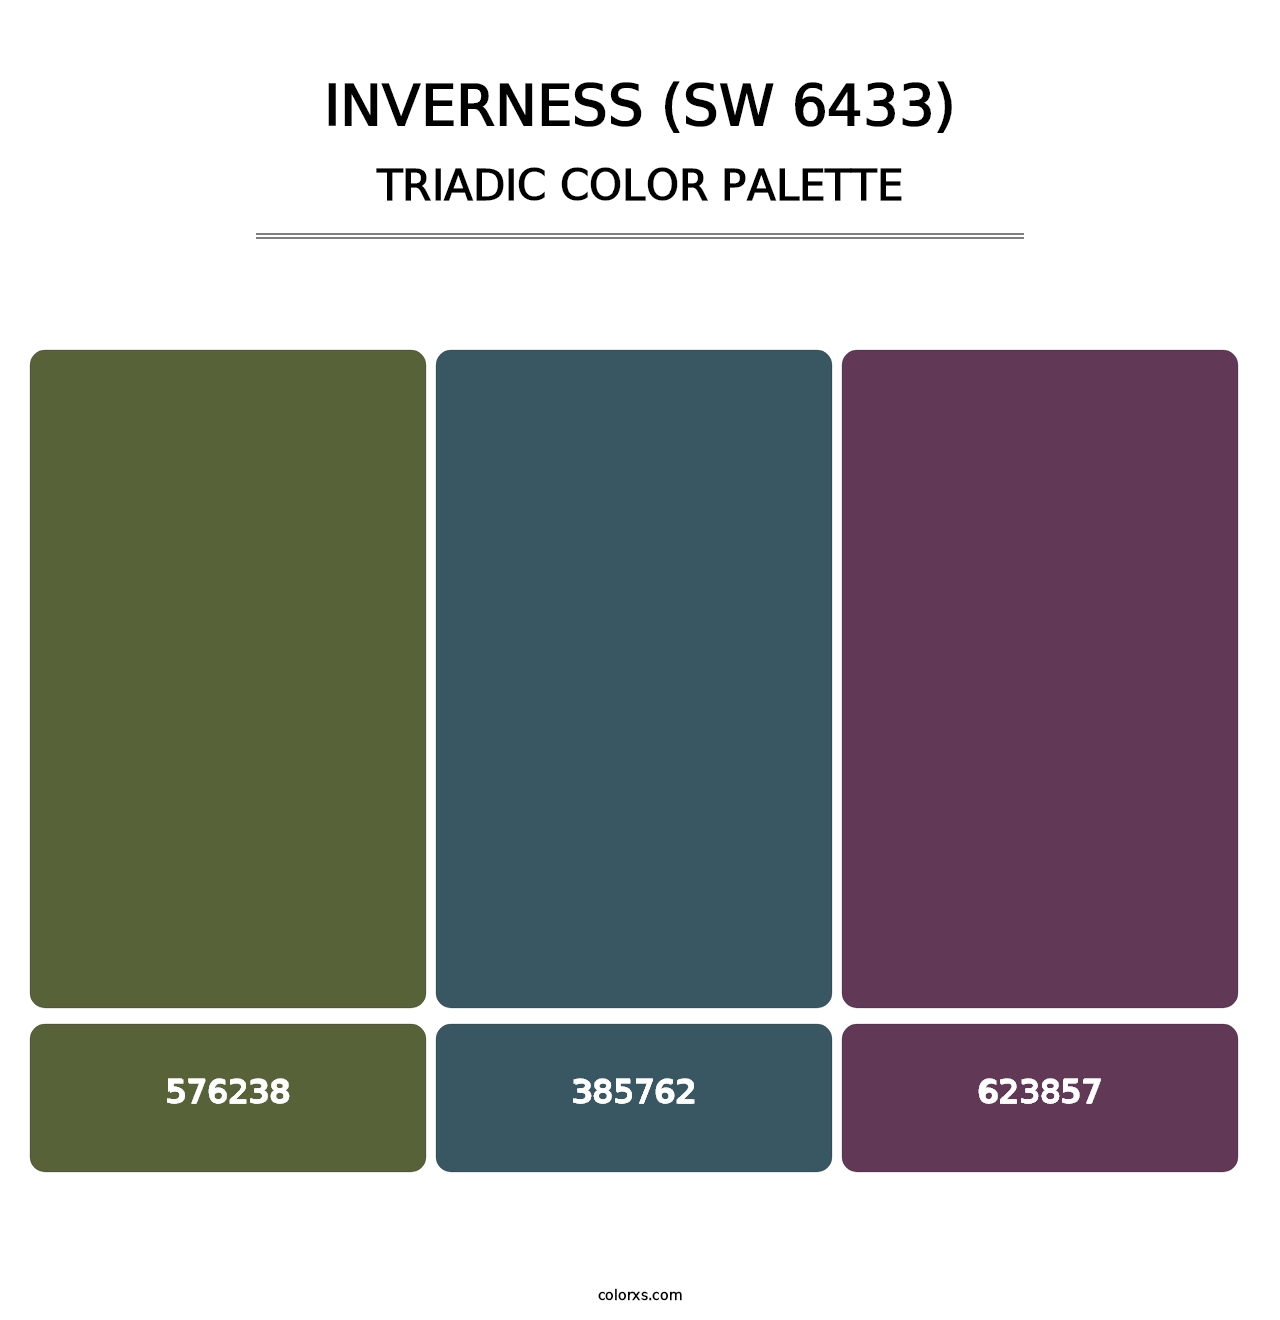 Inverness (SW 6433) - Triadic Color Palette